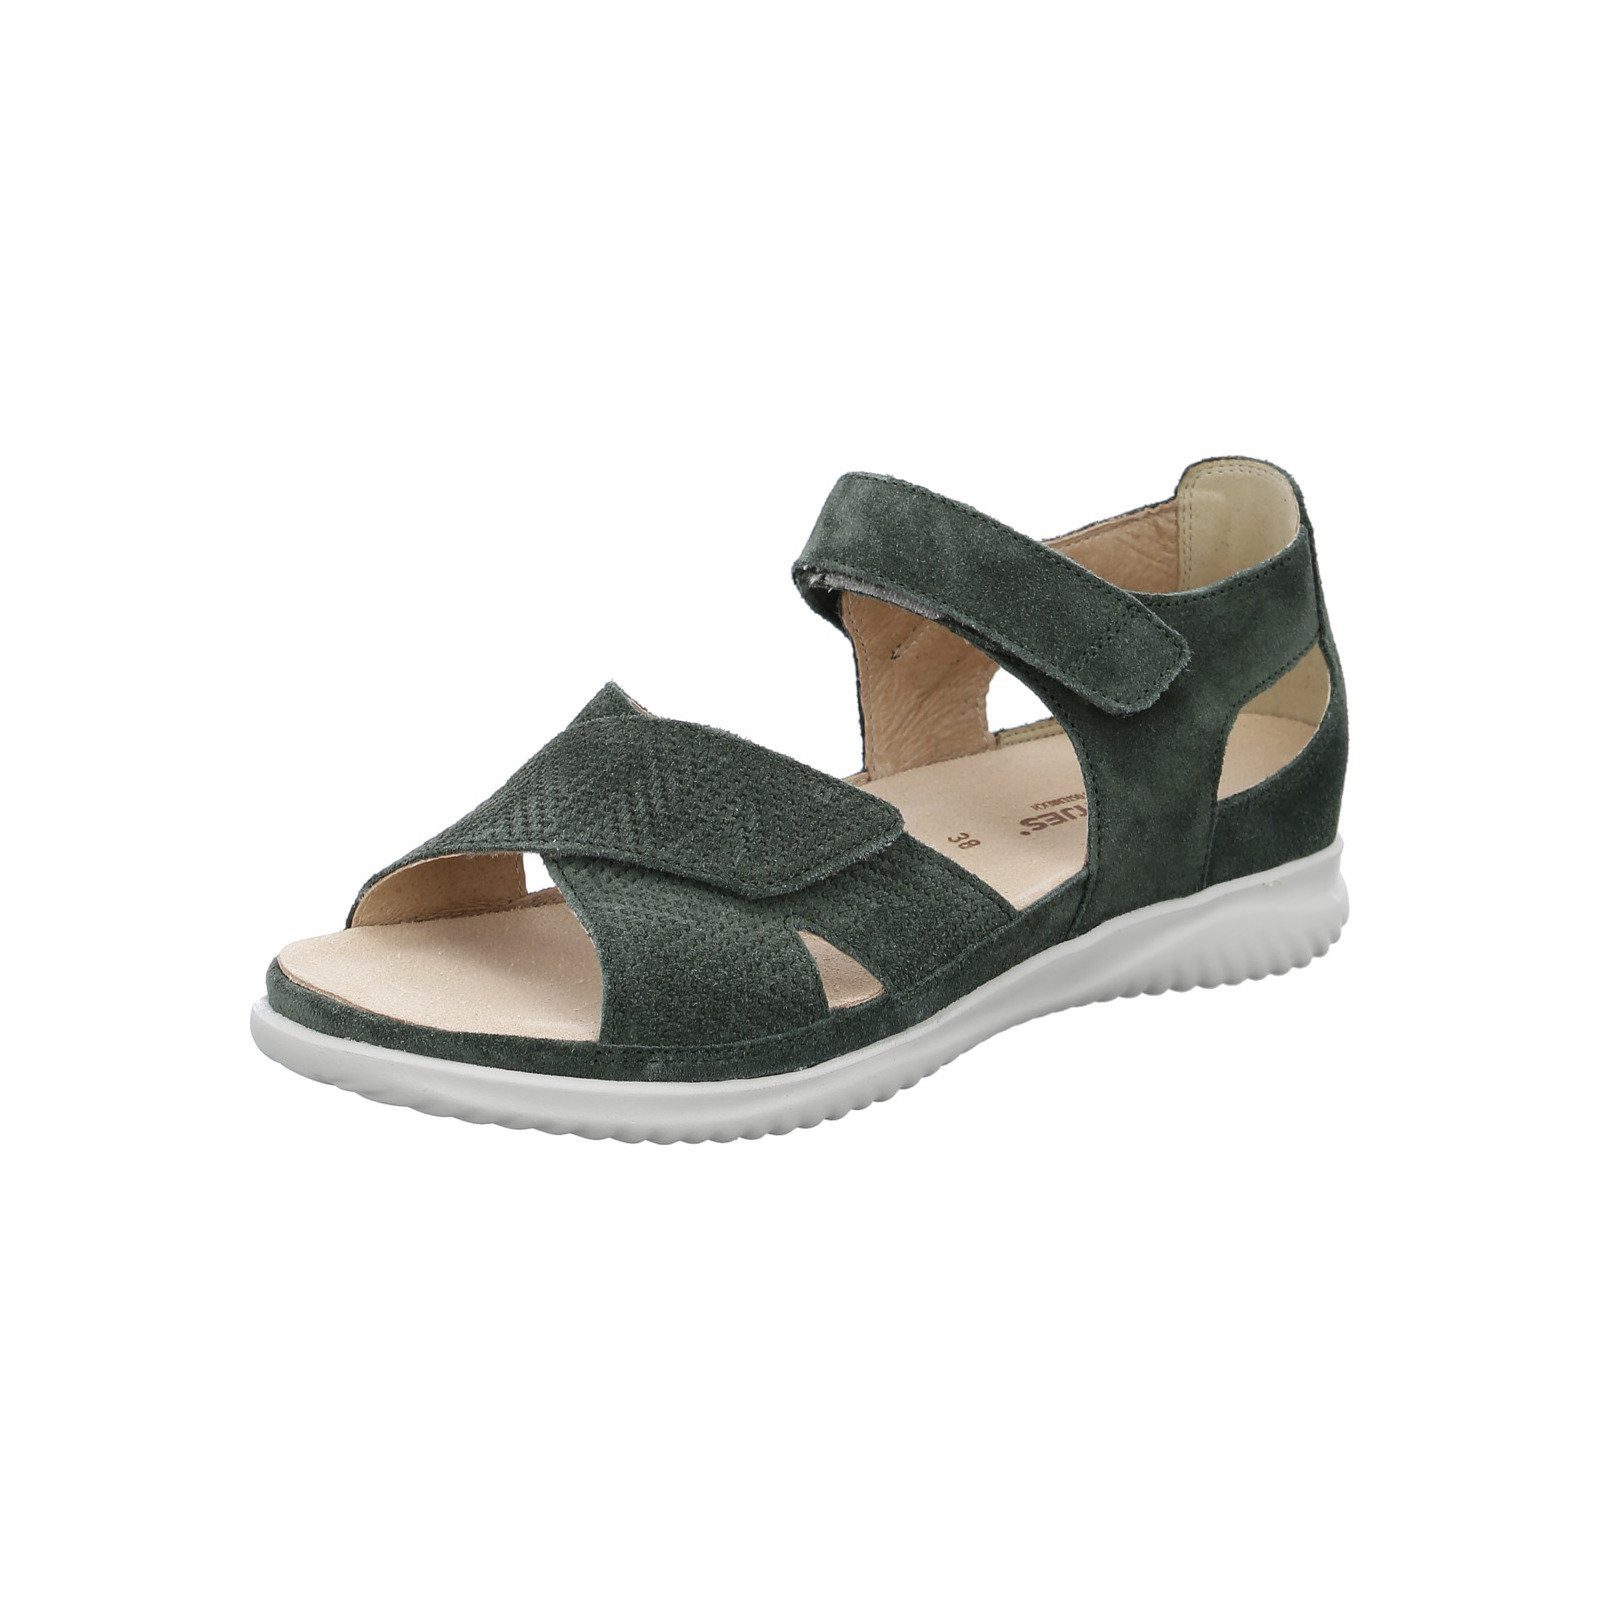 Hartjes Breeze - Damen Schuhe Sandalette Velours grün